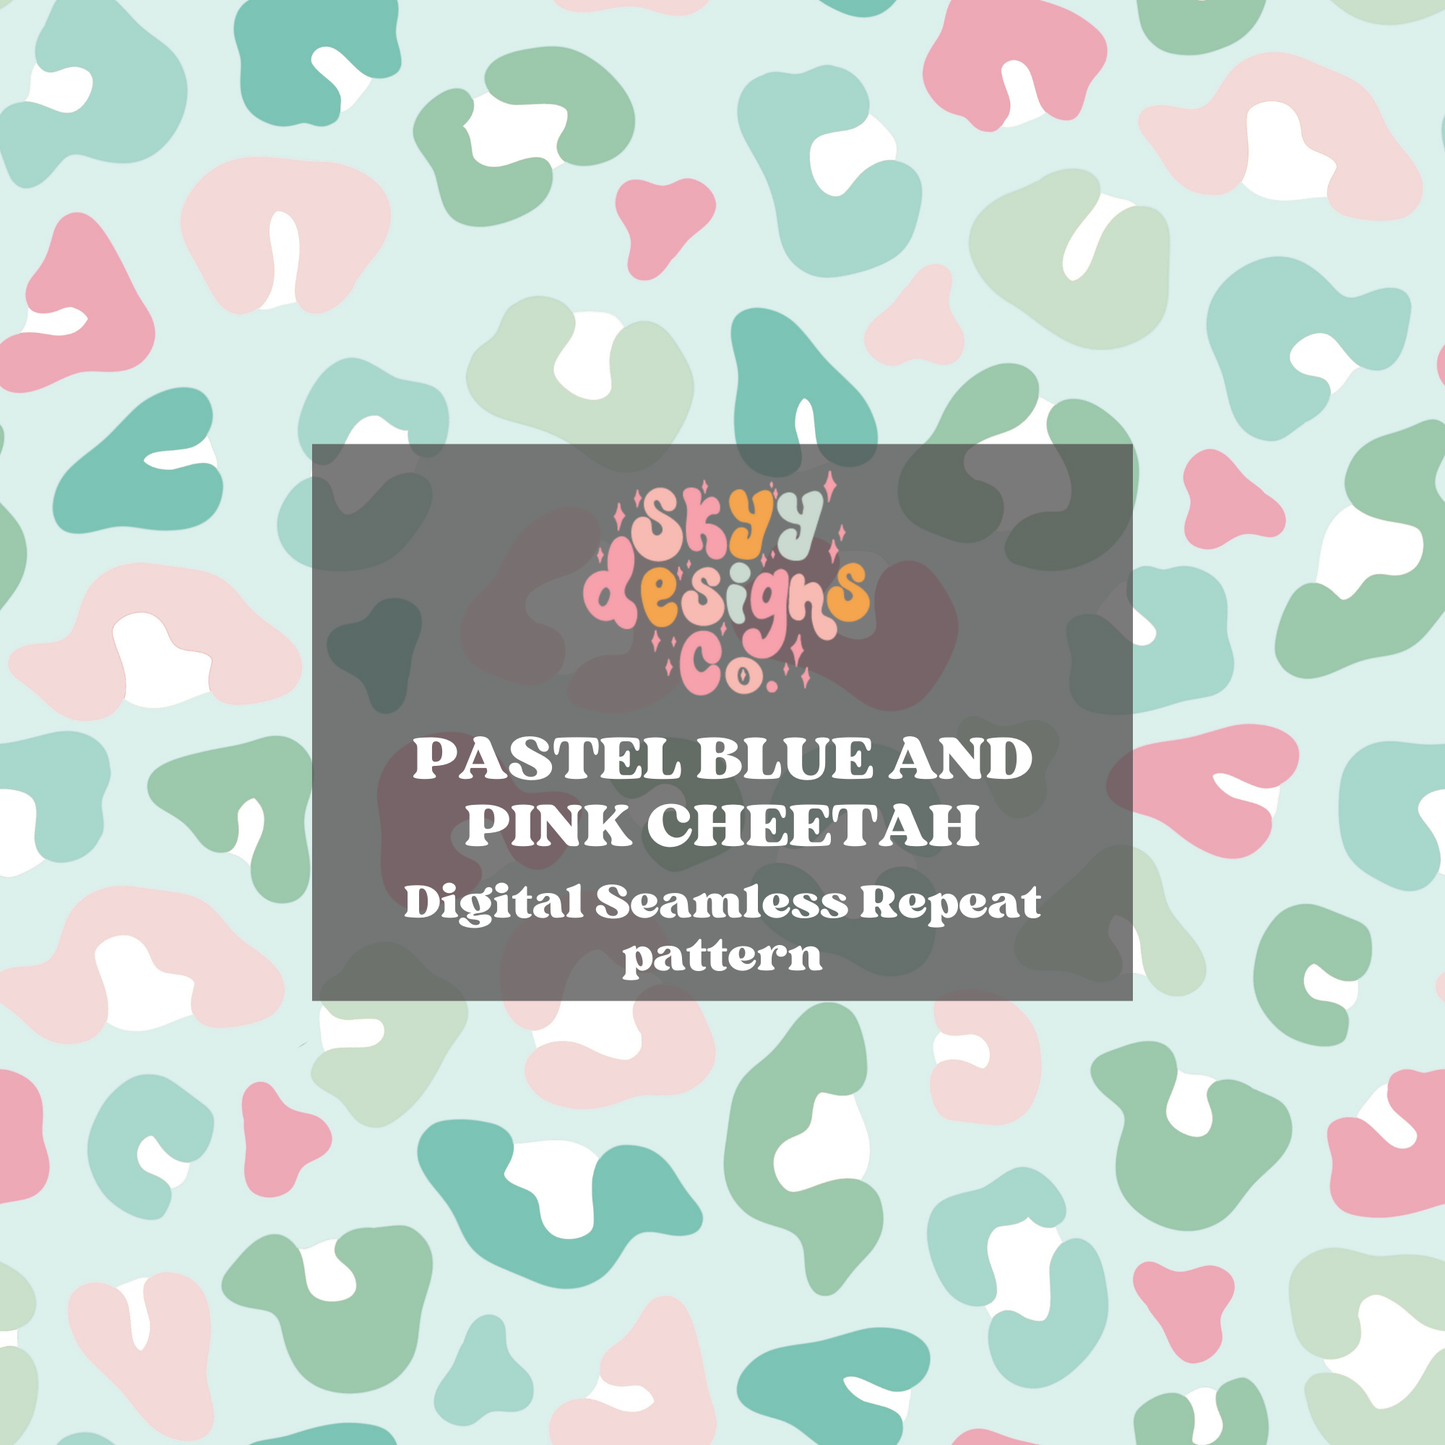 Blue and pink Cheetah print seamless pattern